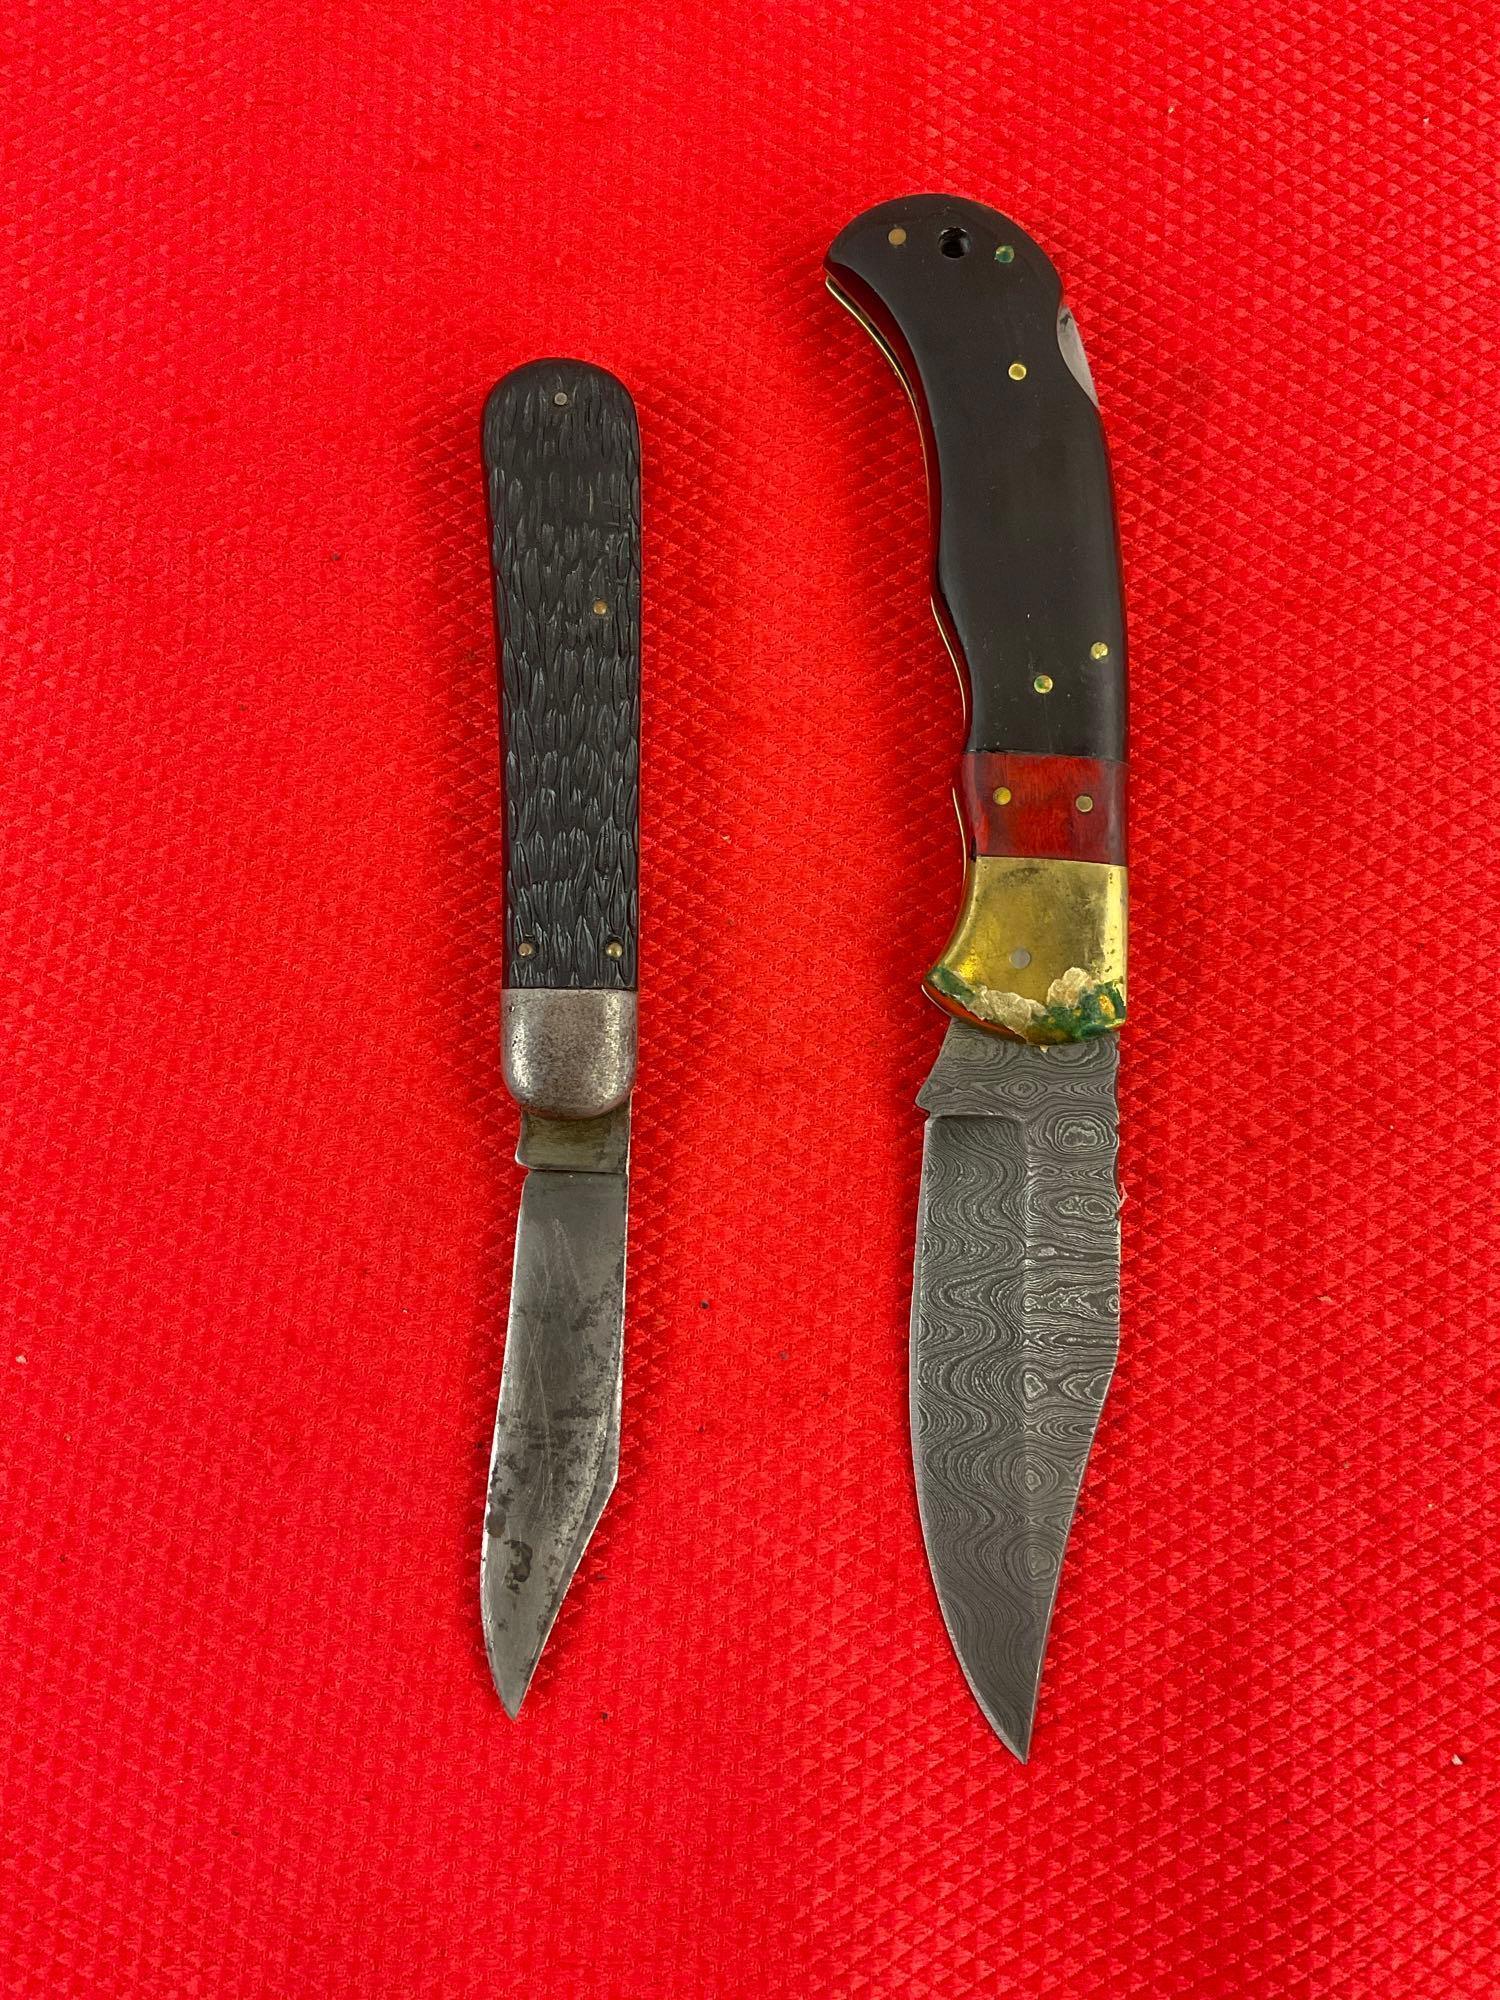 2 pcs Steel Folding Blade Pocket Knife Assortment. 1x Schrade Walden, 1x Unknown Maker. See pics.